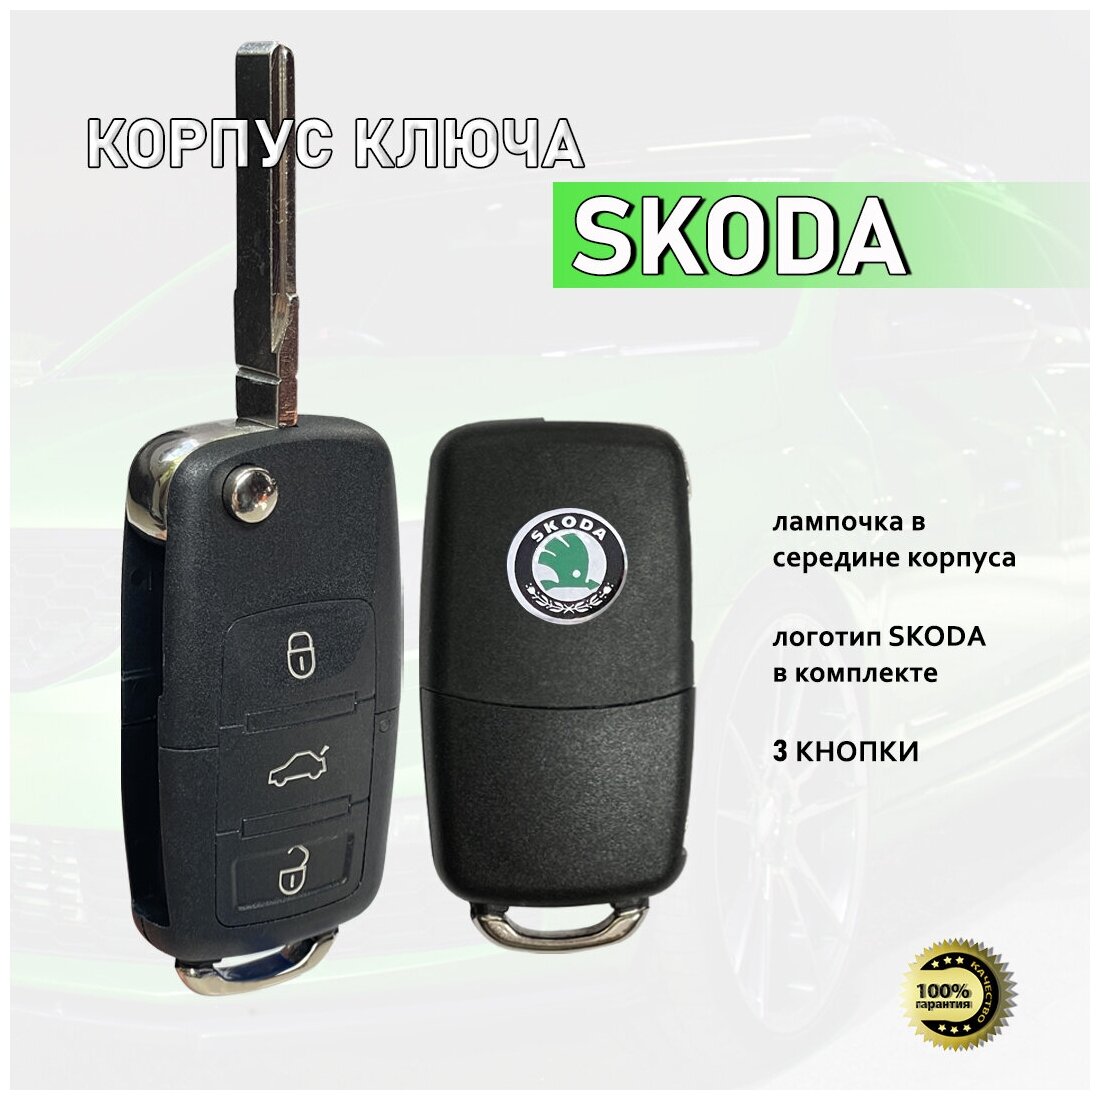 Корпус выкидного ключа зажигания шкода / Корпус ключа замка зажигания авто SKODA (3 кнопки HU66)